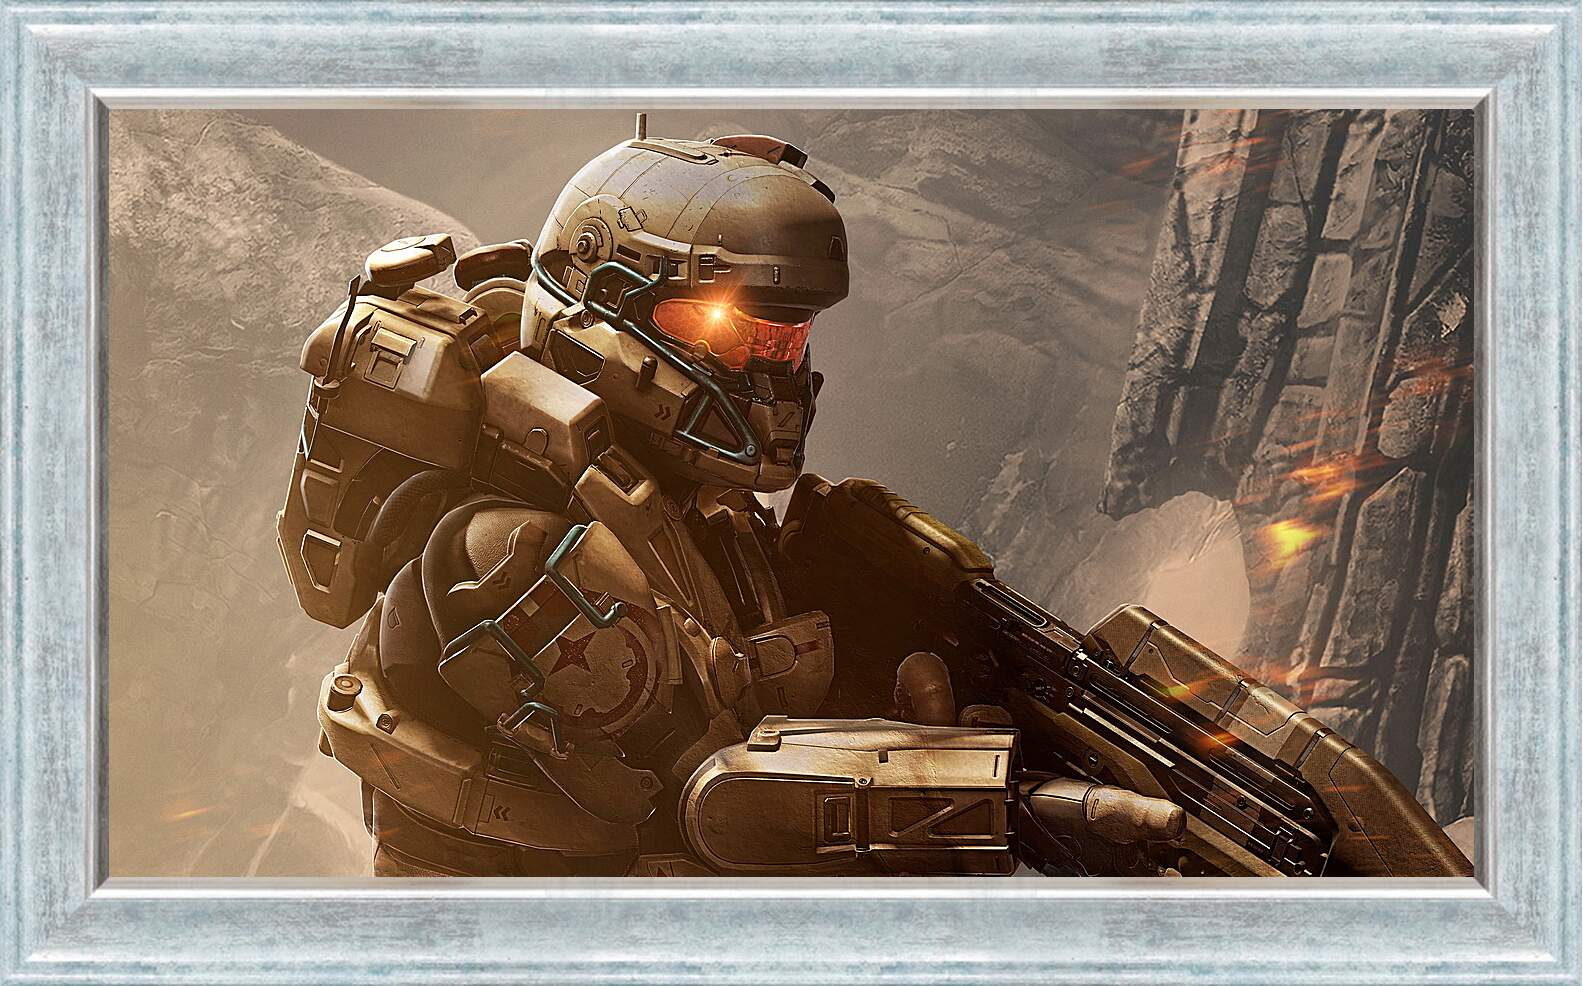 Картина в раме - Halo 5: Guardians